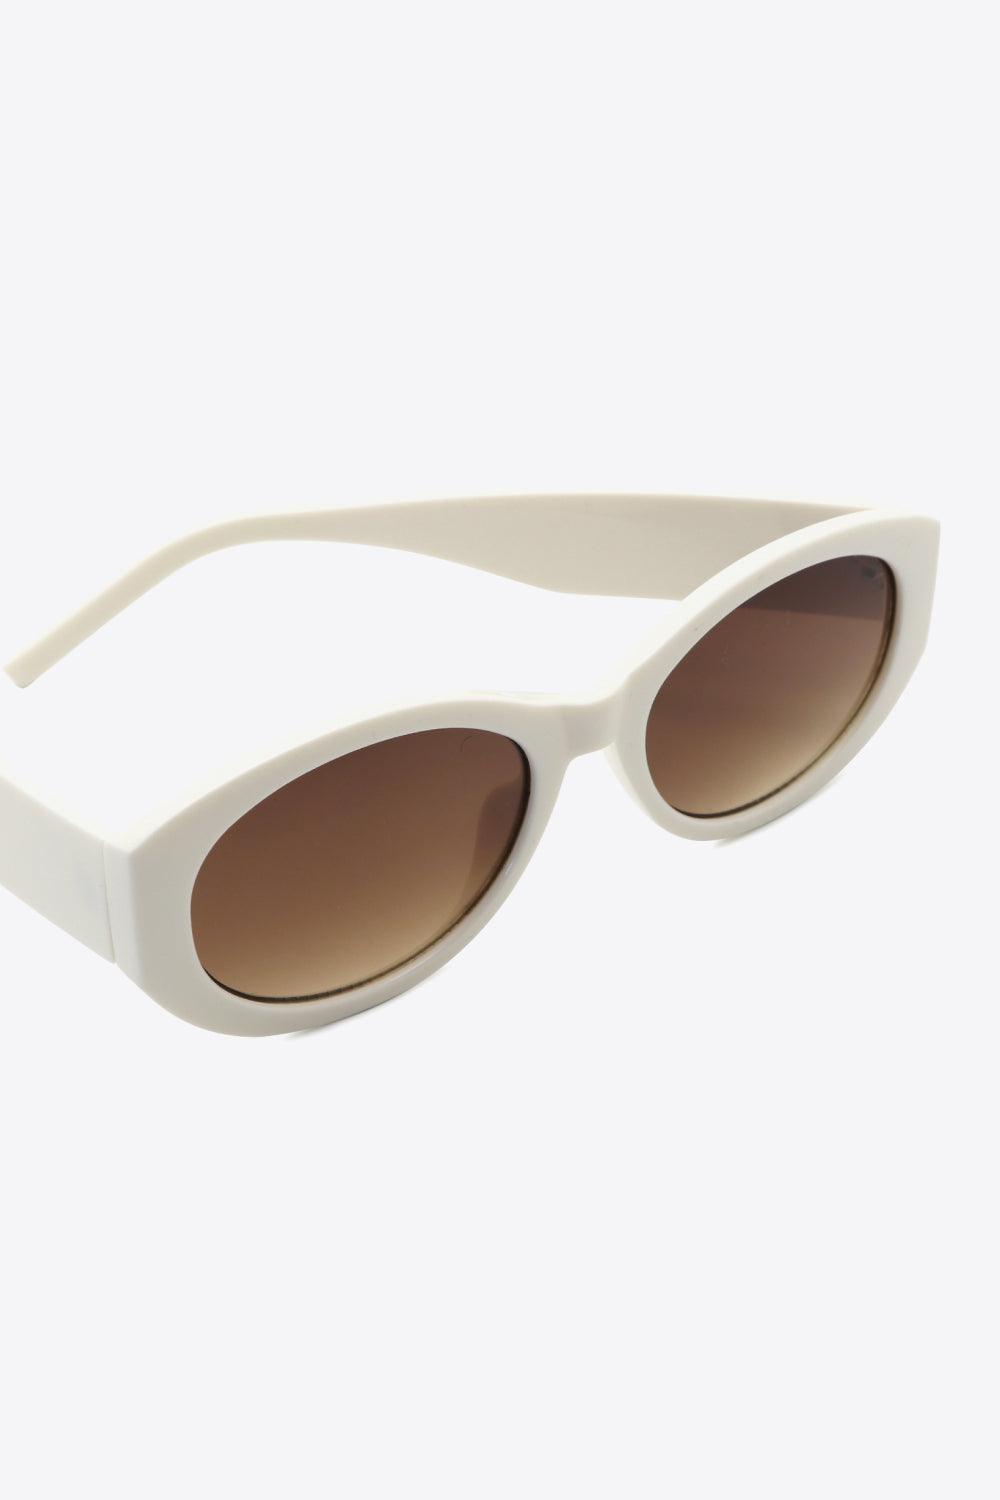 Beige Frame Oval Shape Polycarbonate Sunglasses - MXSTUDIO.COM